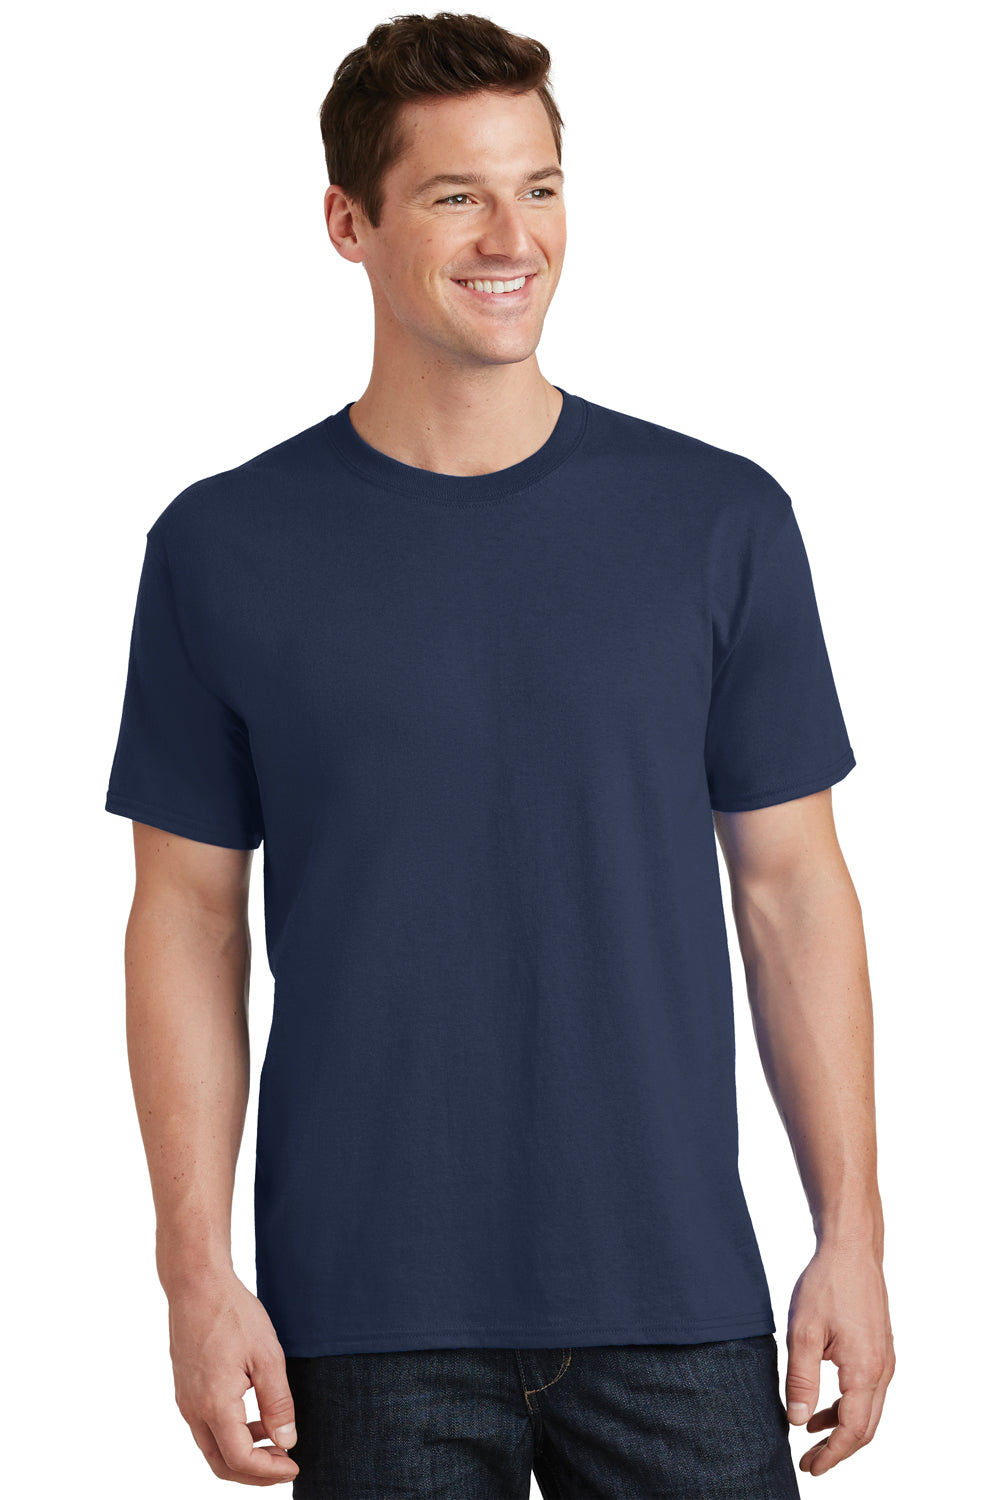 Port & Company PC54 Mens Core Short Sleeve Crewneck T-Shirt Navy Blue Front